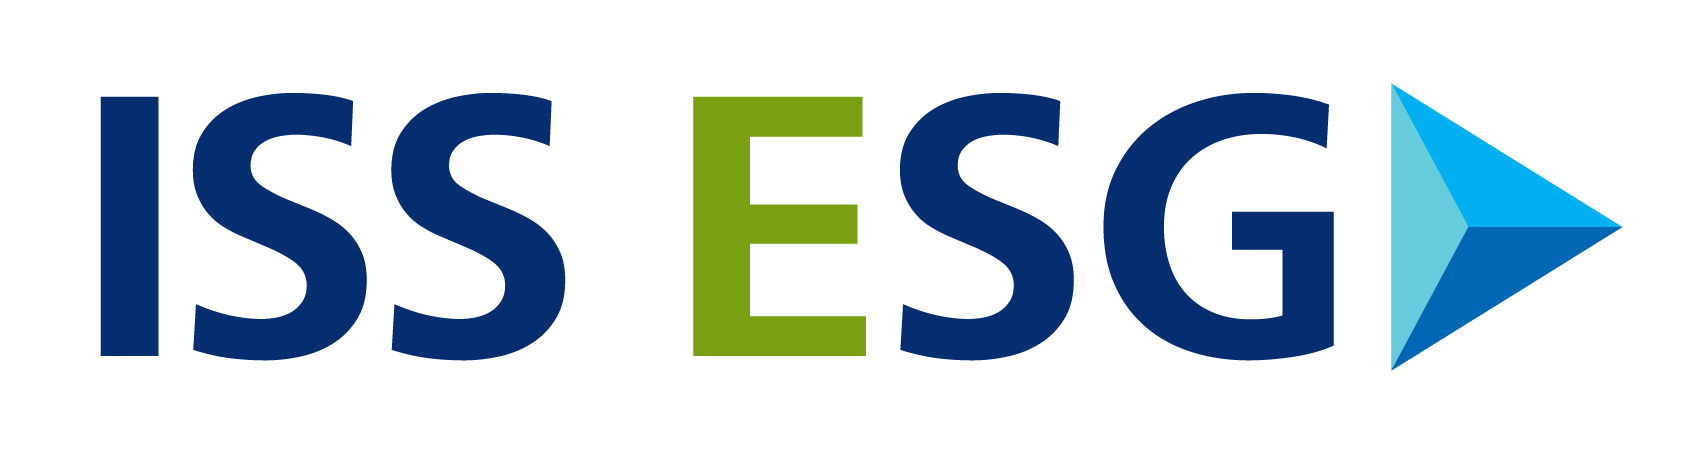 Esg деятельность. ESG. ESG проекты. ESG картинки. ESG logo.